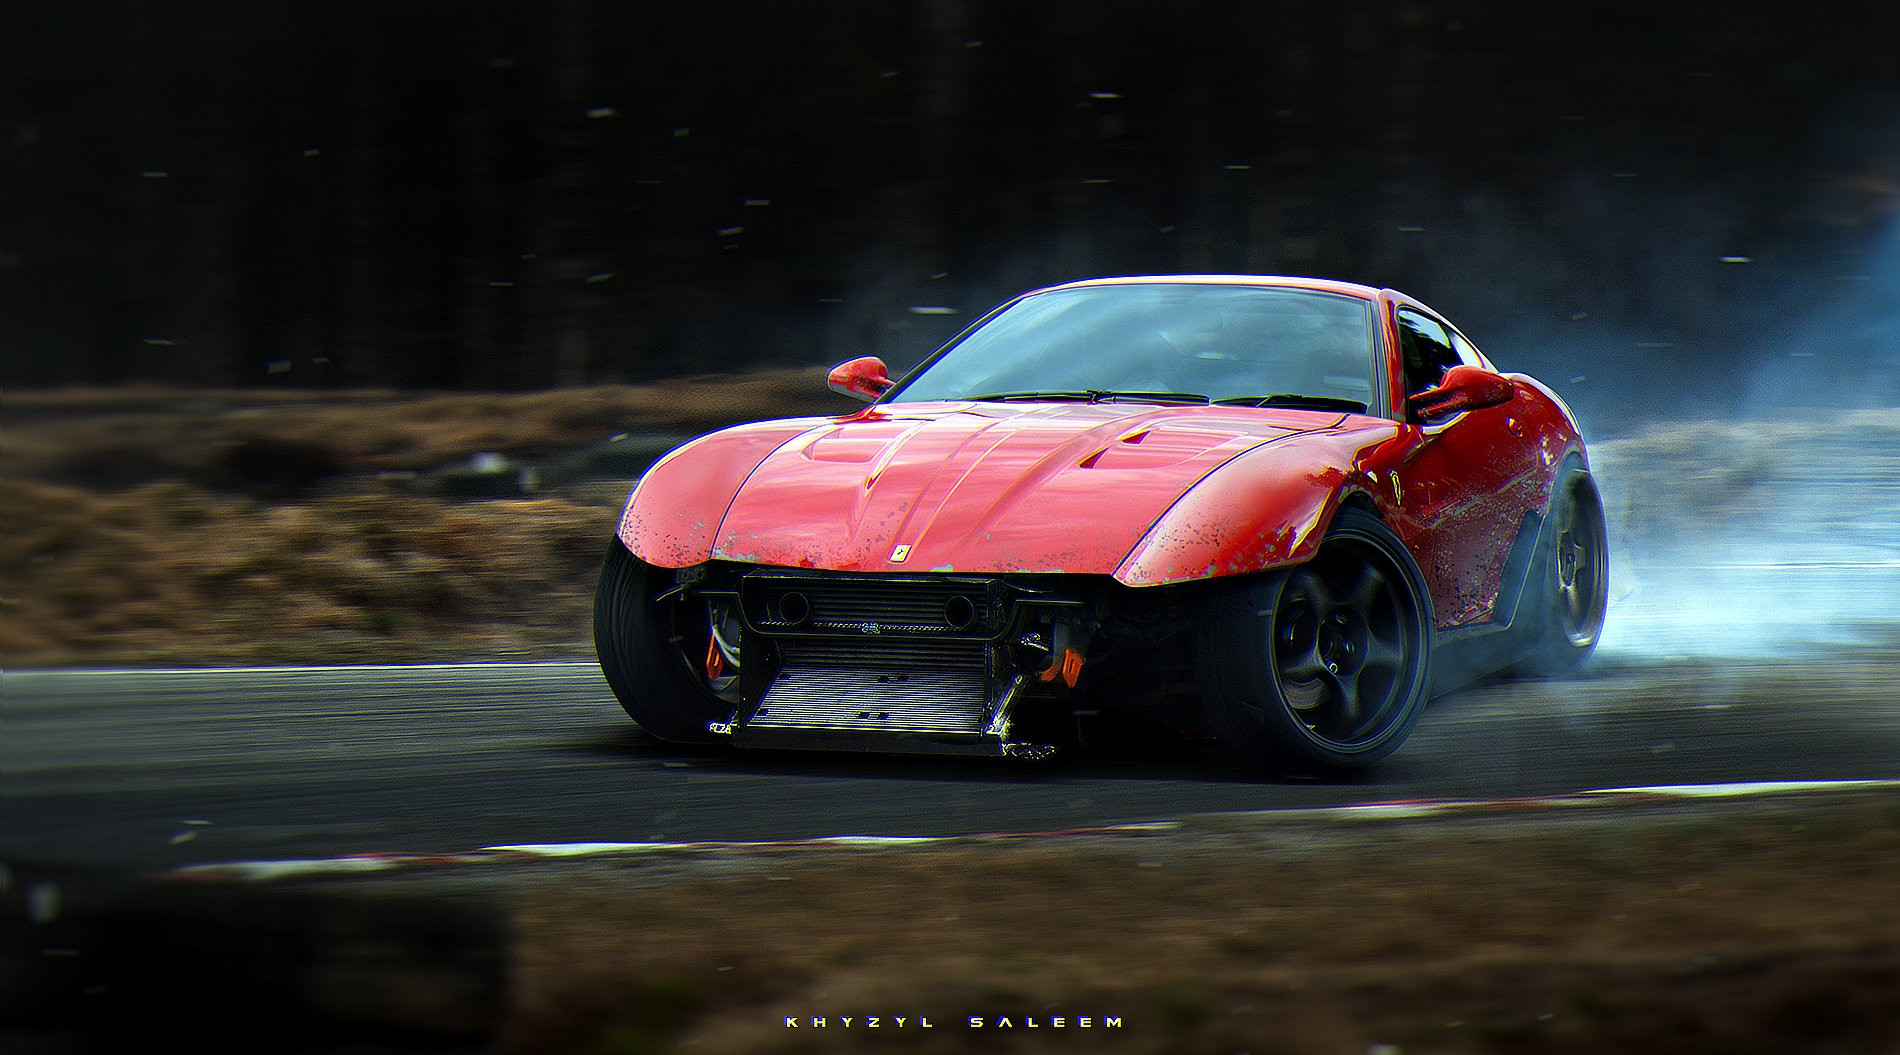 car, Stance, KhyzylSaleem, Drift, Futuristic, Ferrari 599 Wallpaper